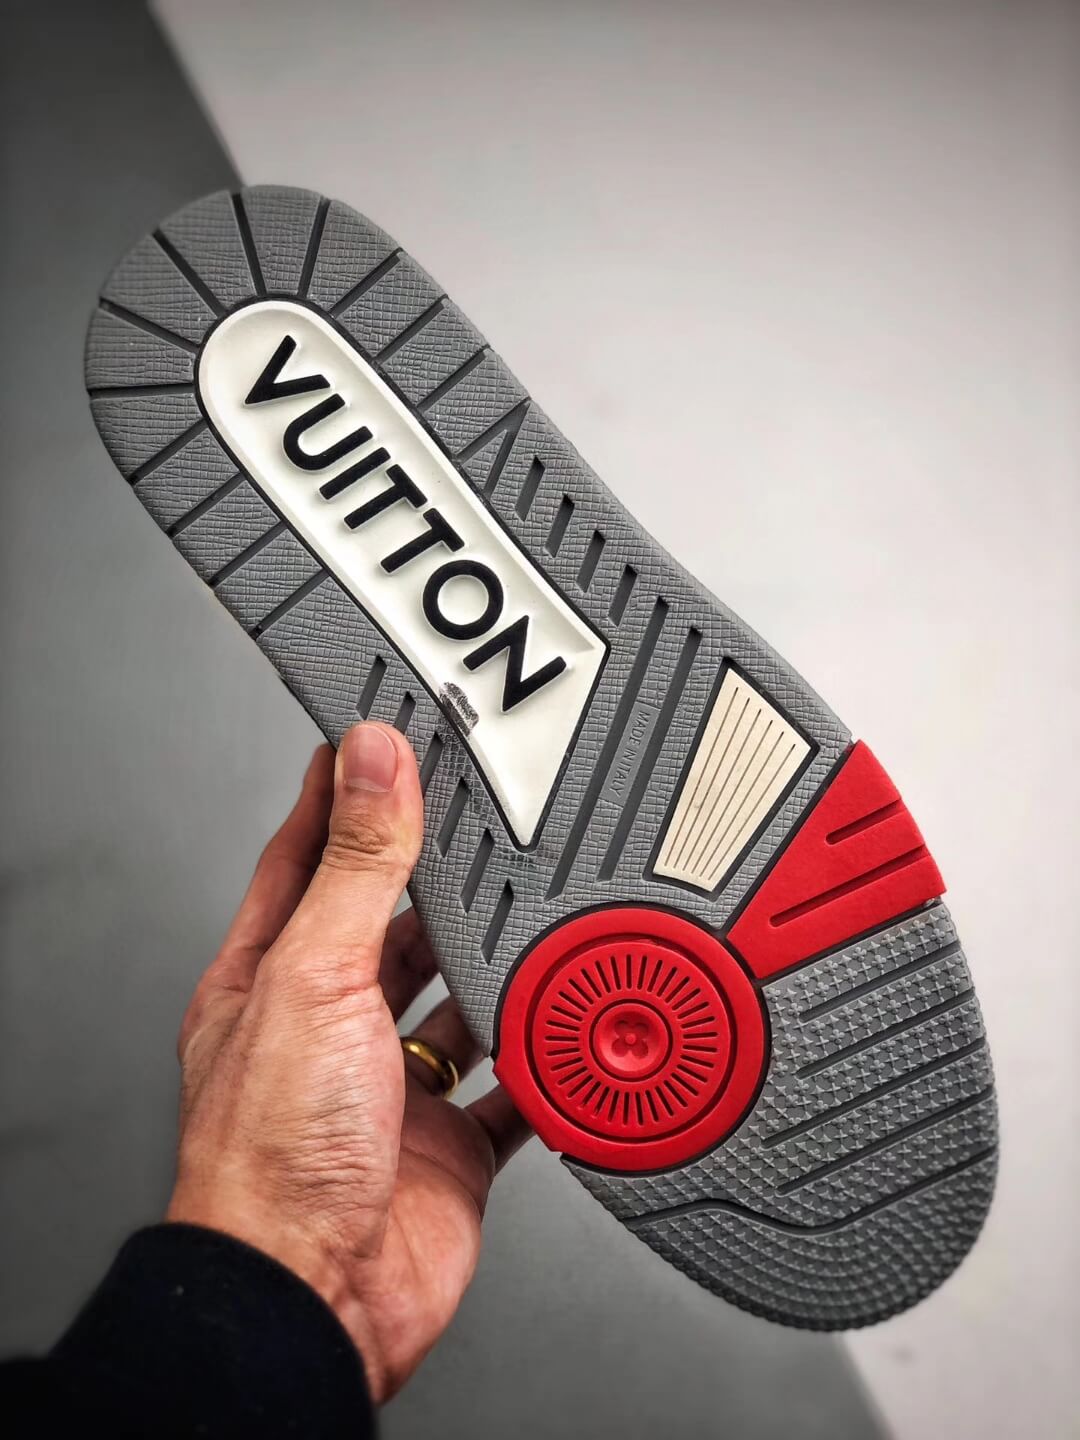 The Virgil Abloh Louis Vuitton LV Trainer Sneaker Boot #54 Black